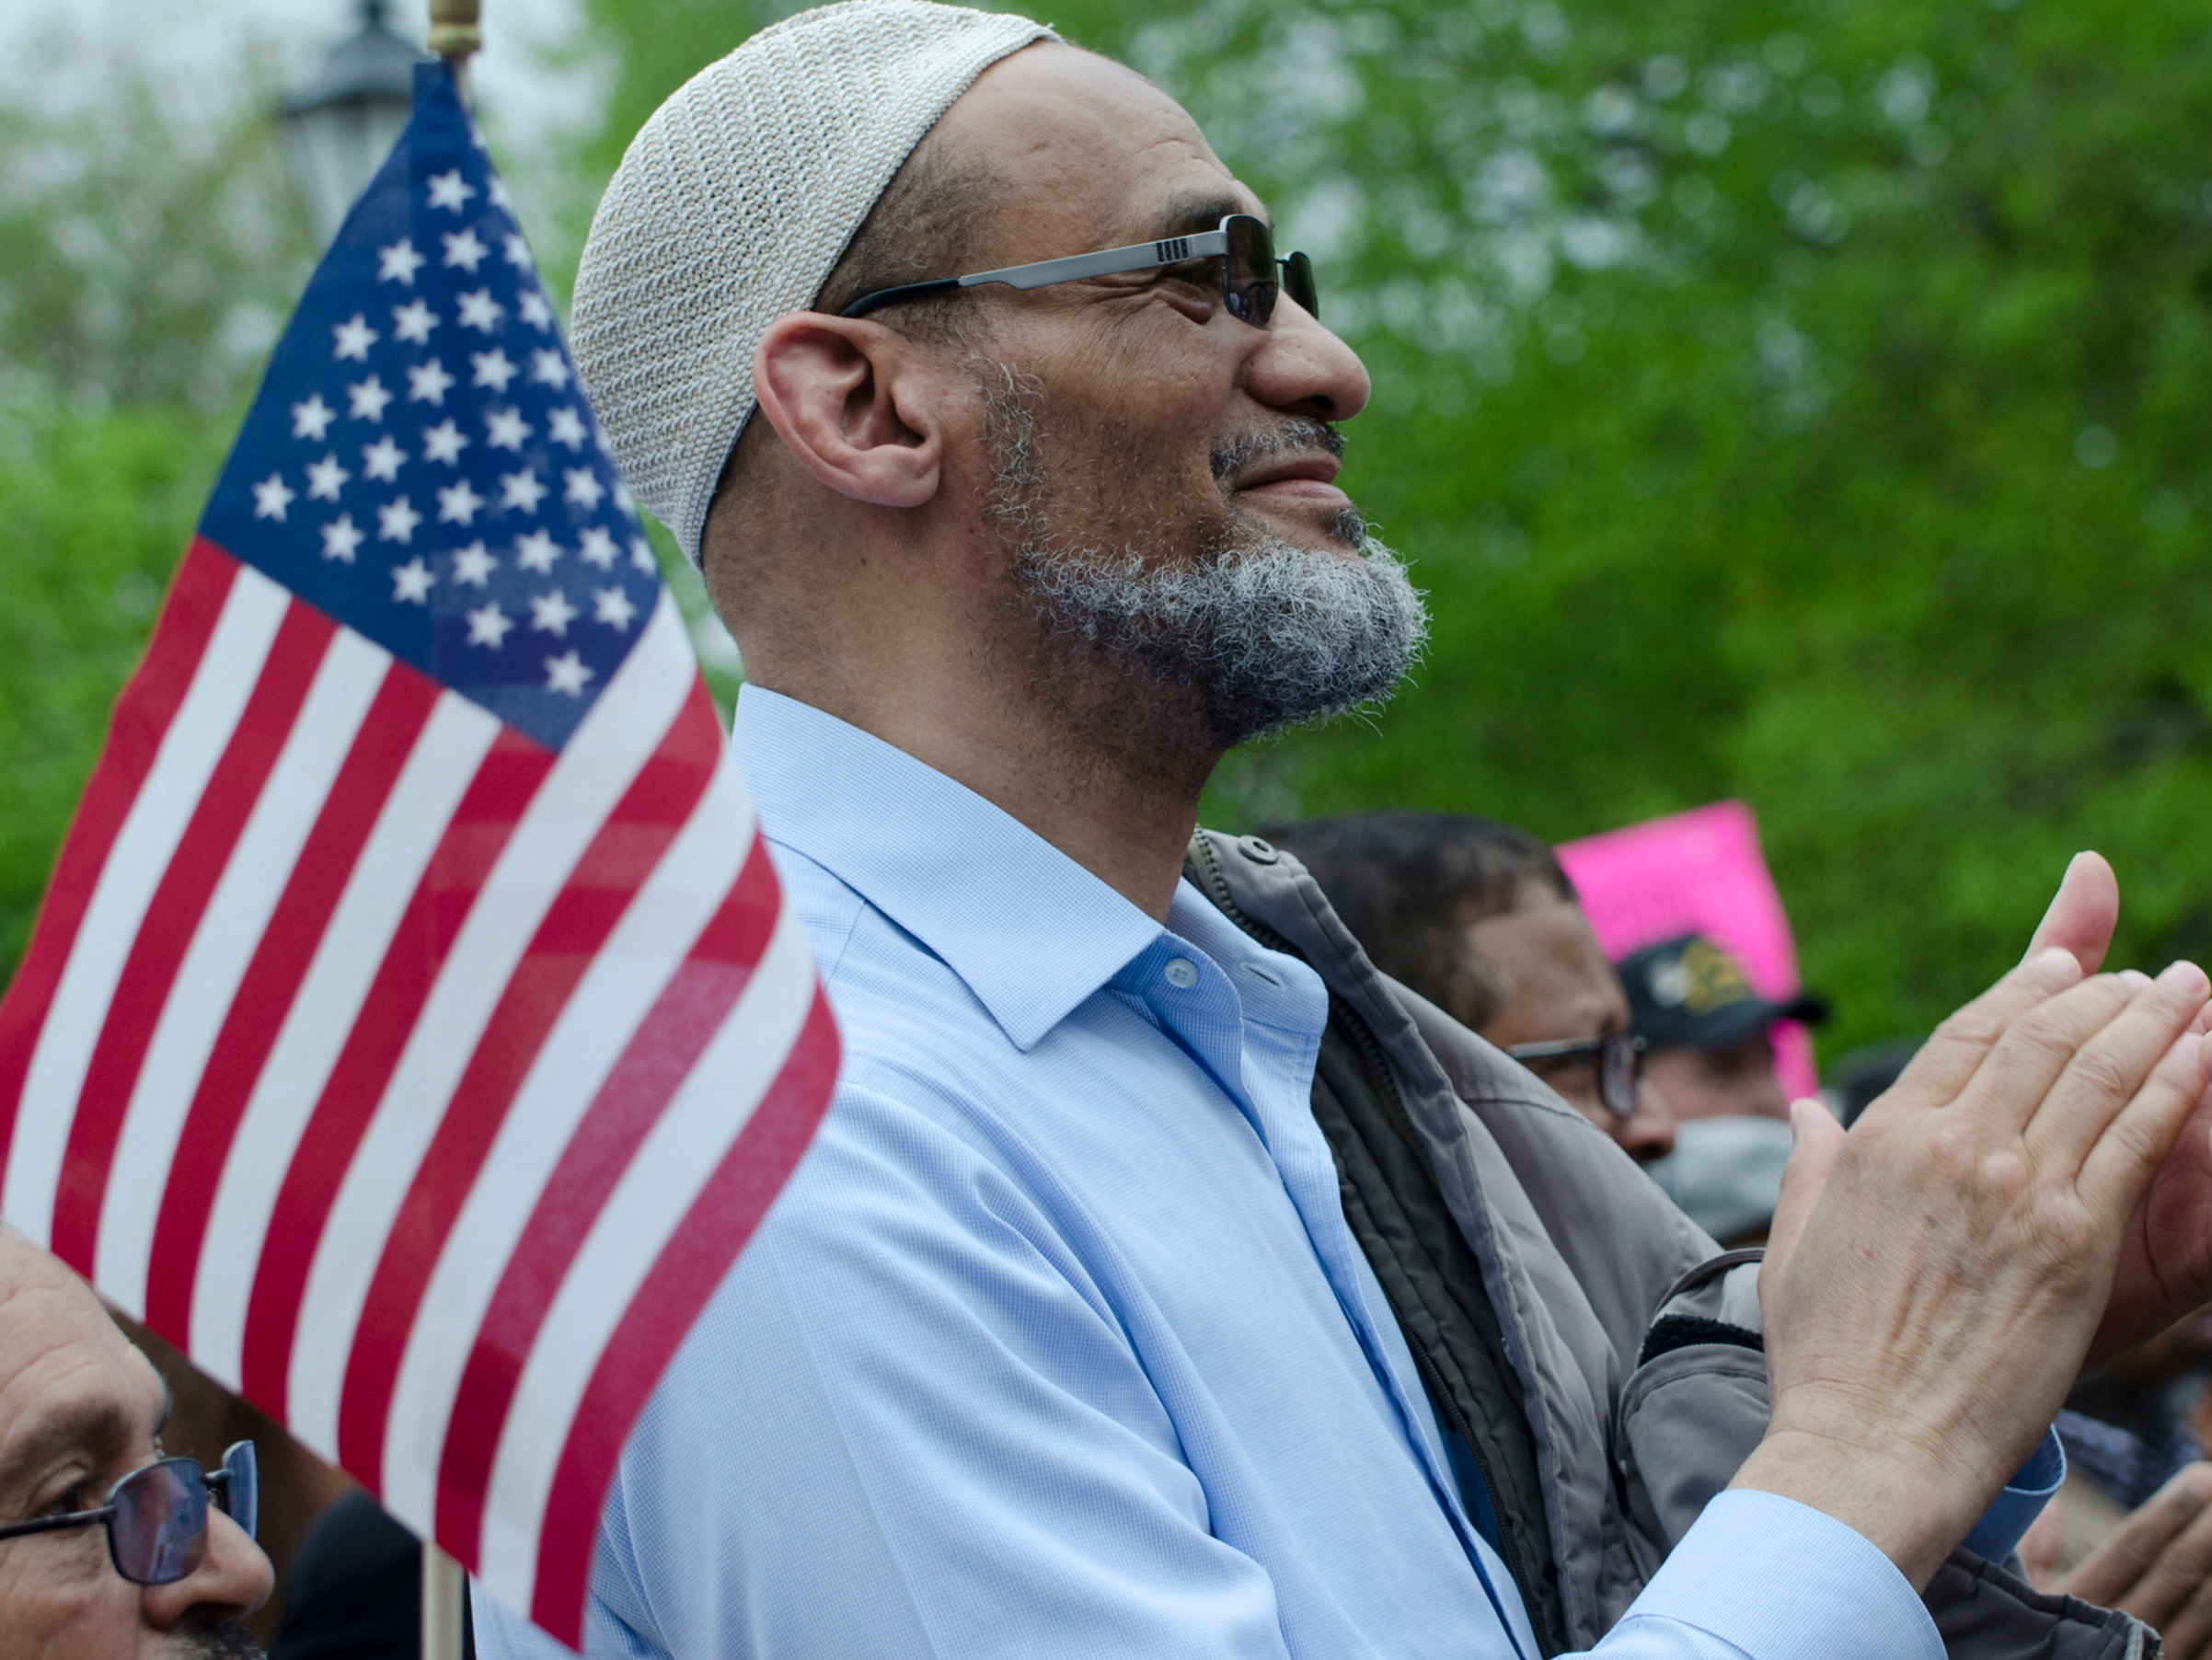 Islam and Politics in America Today